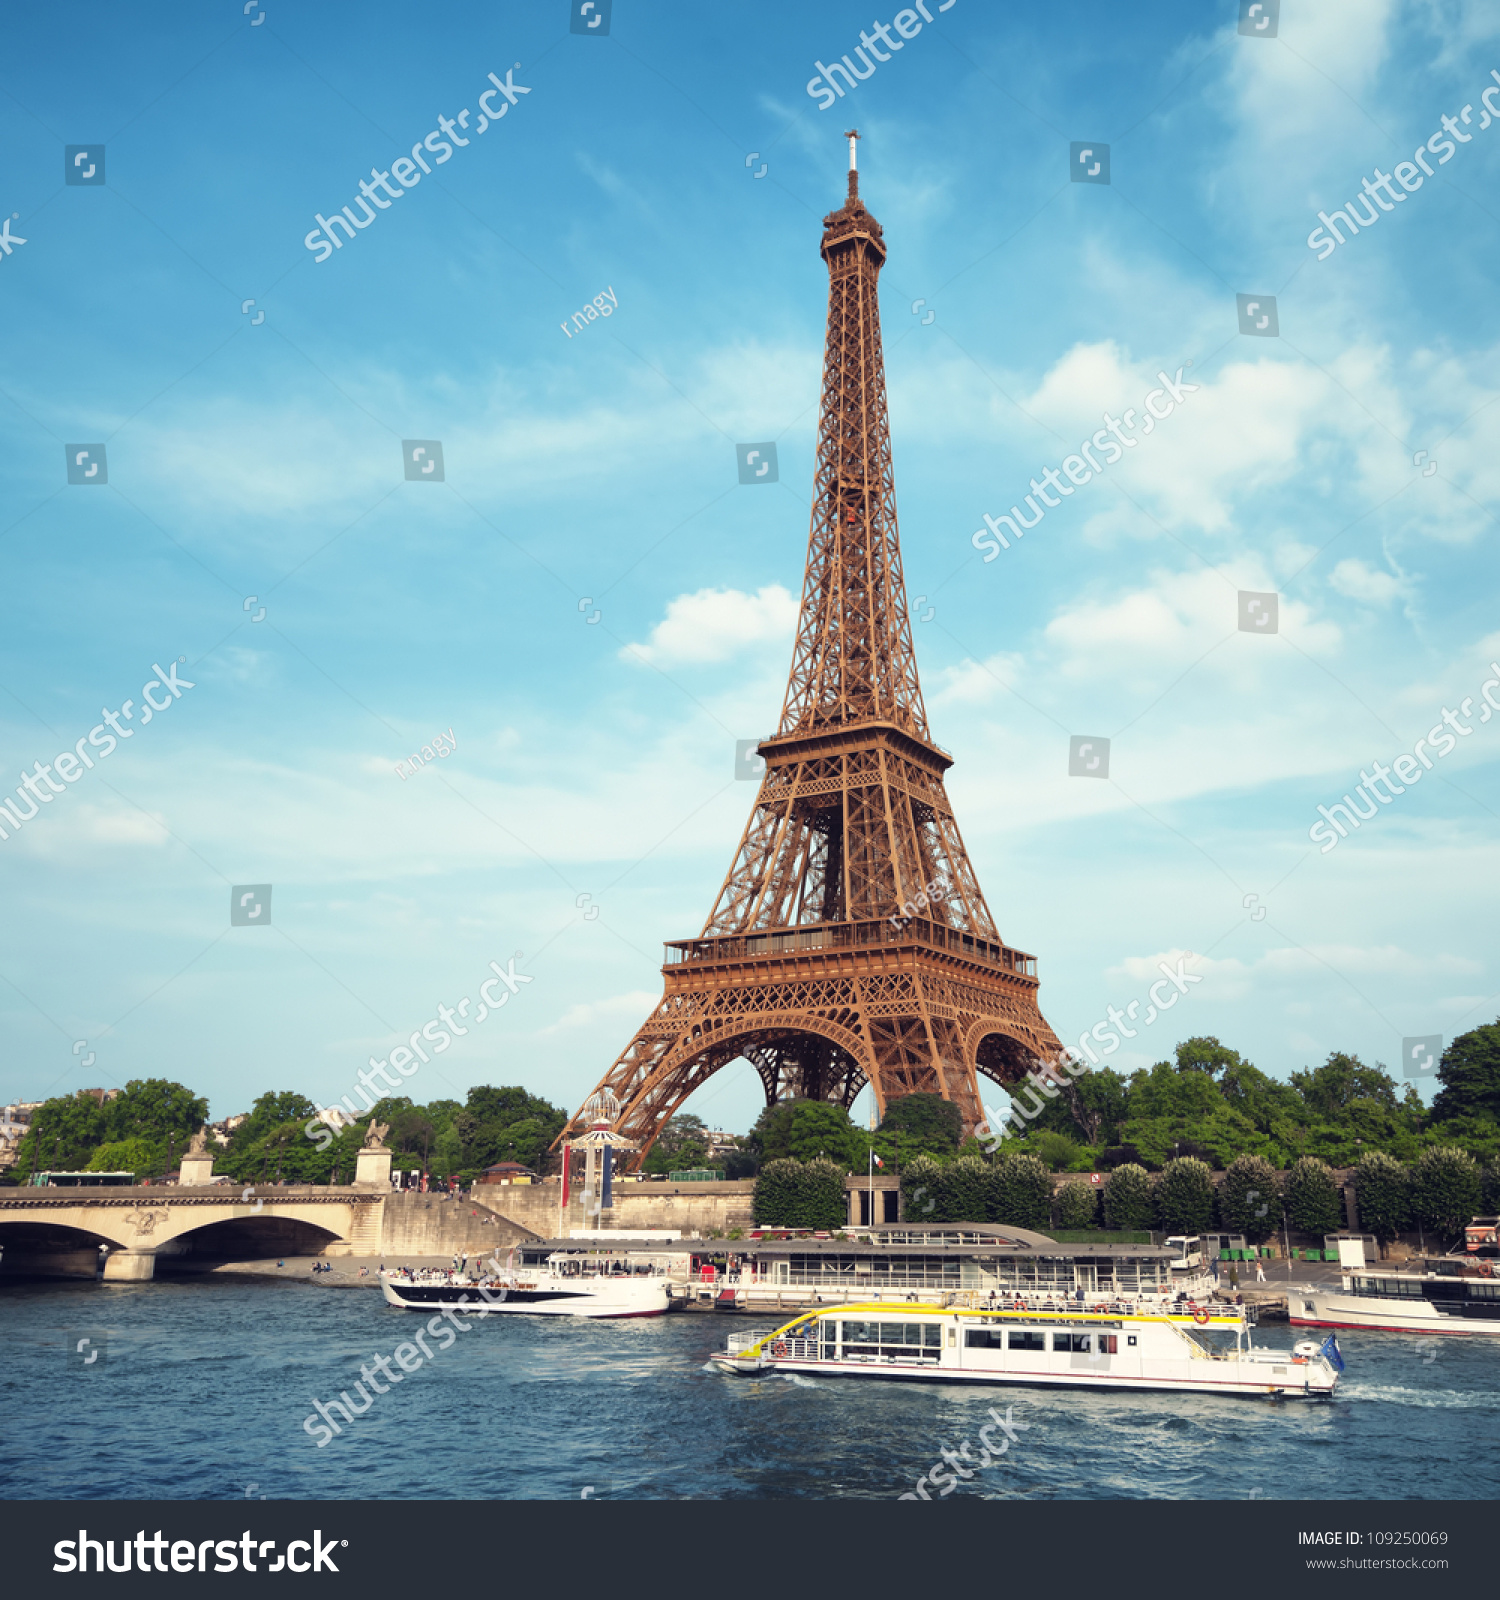 Eiffel Tower And River Seine, Paris - France. Stock Photo 109250069 ...